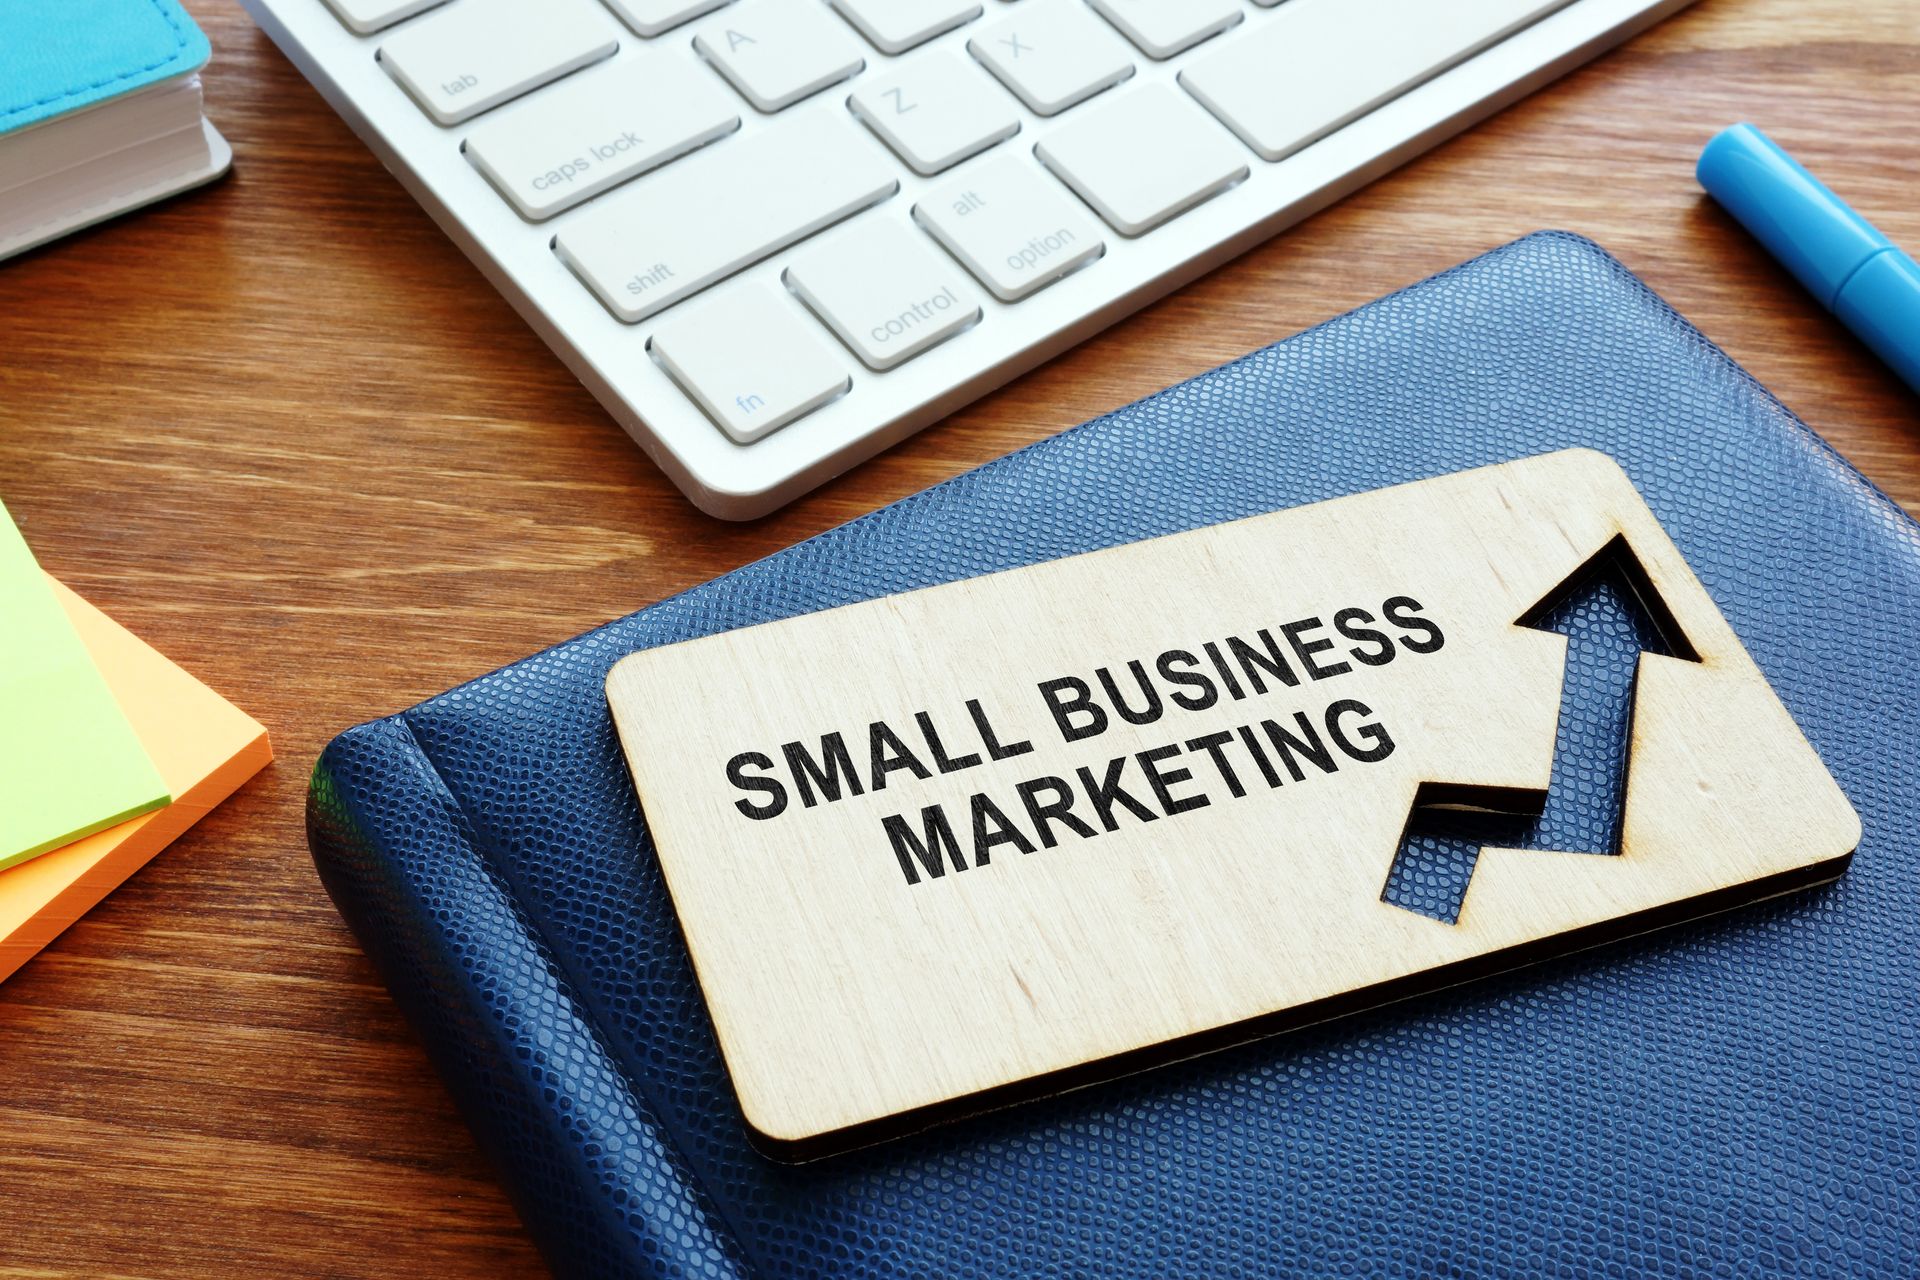 Small Business Marketing Stratford Upon Avon